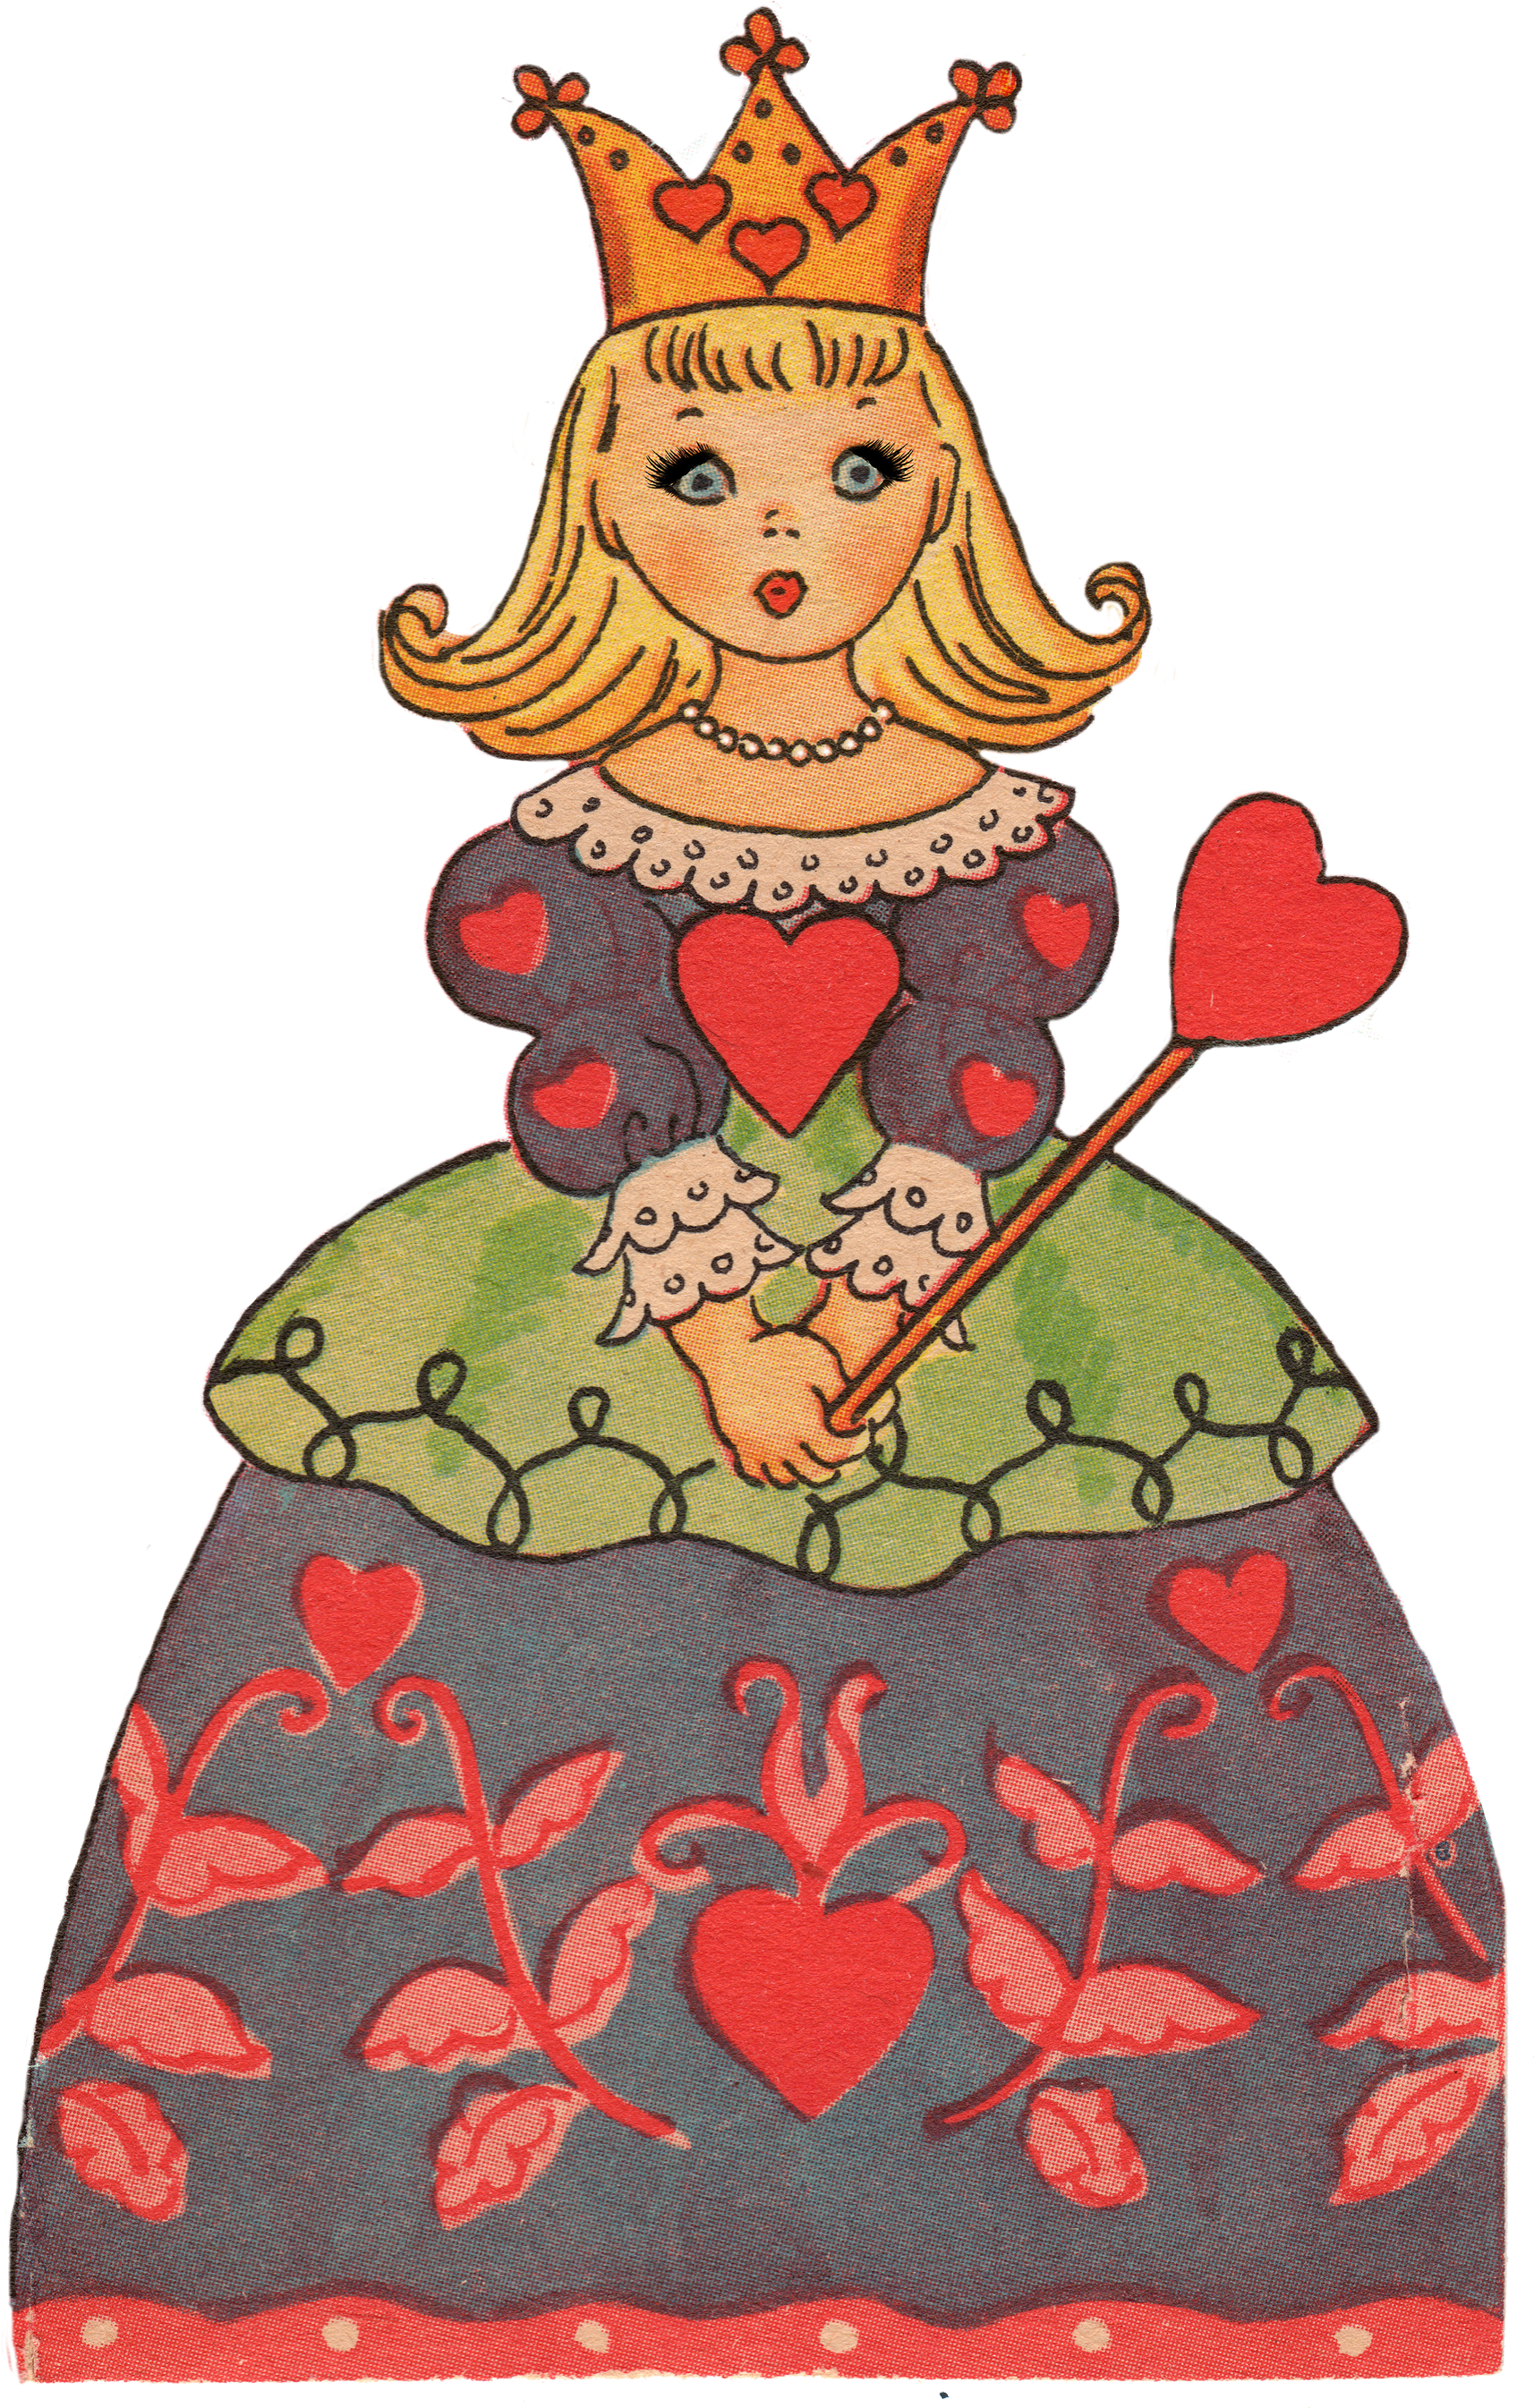 A Cartoon Of A Girl Holding A Heart